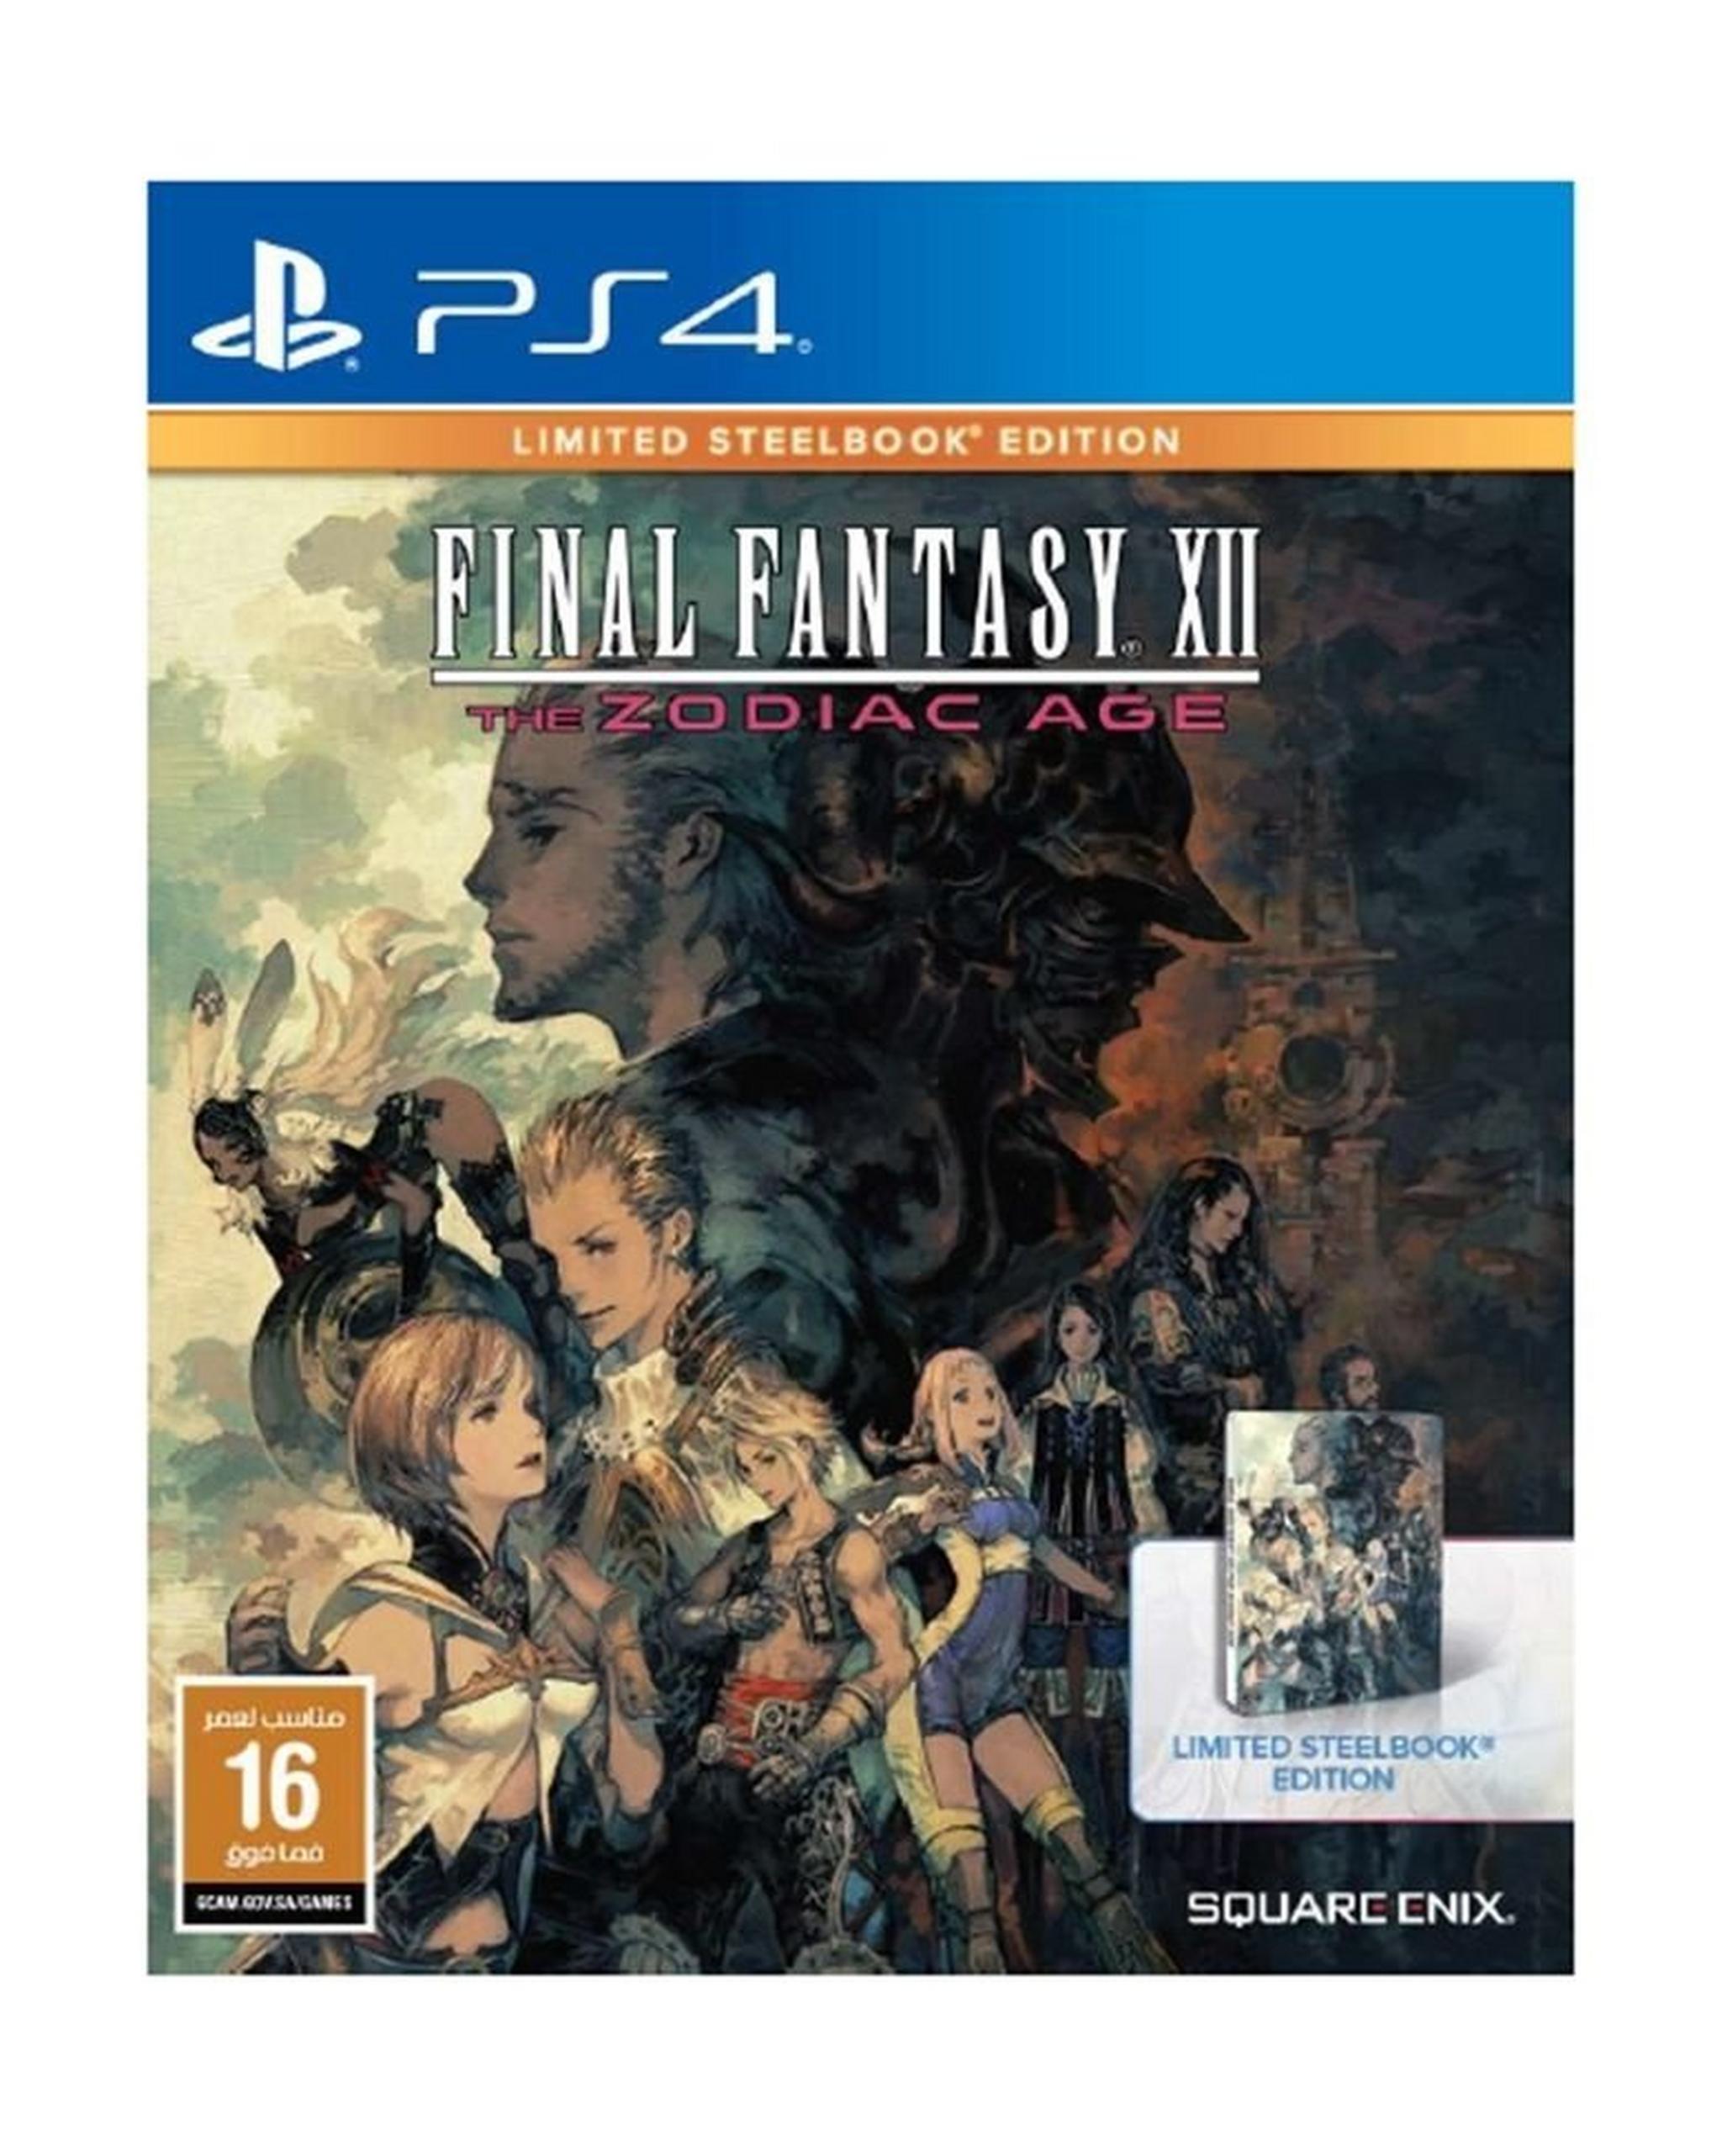 Final Fantasy XII The Zodiac Age: PlayStation 4 Game